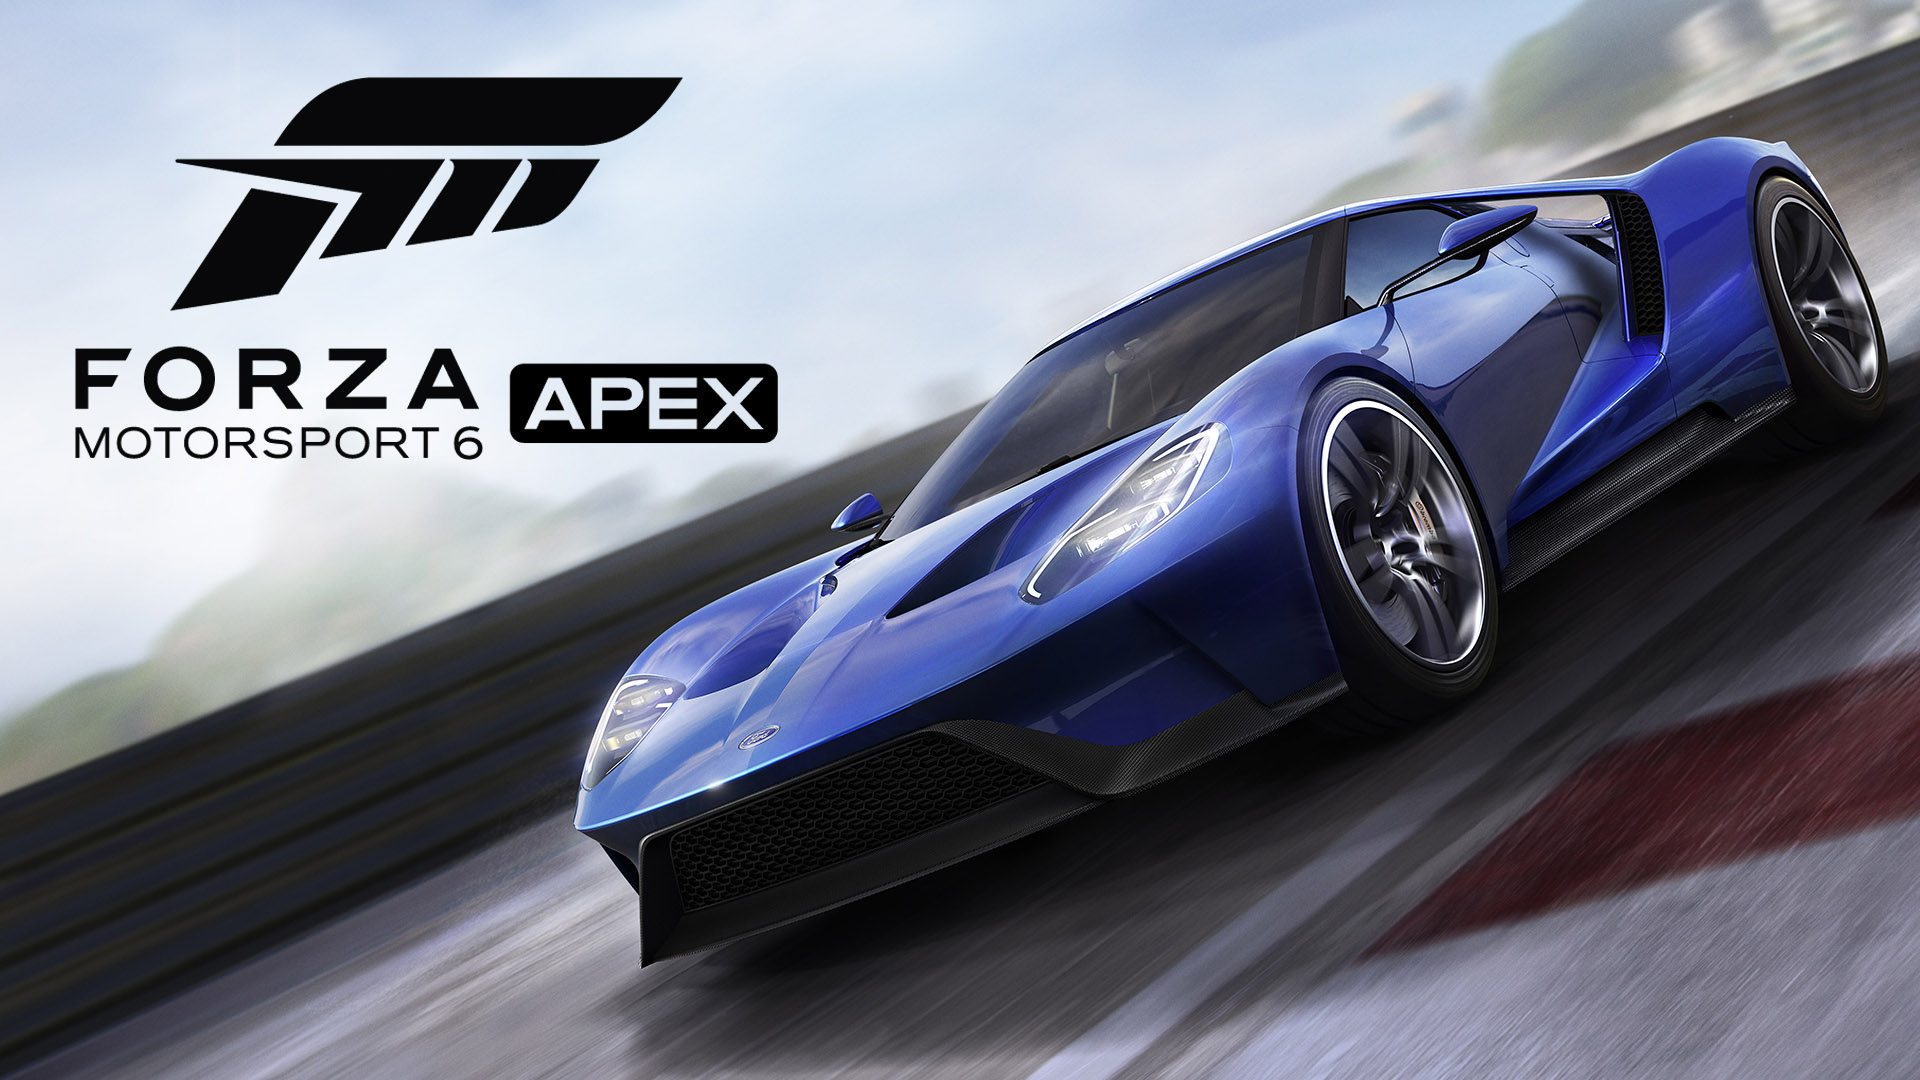 Forza Motorsport 6: Apex visual ID